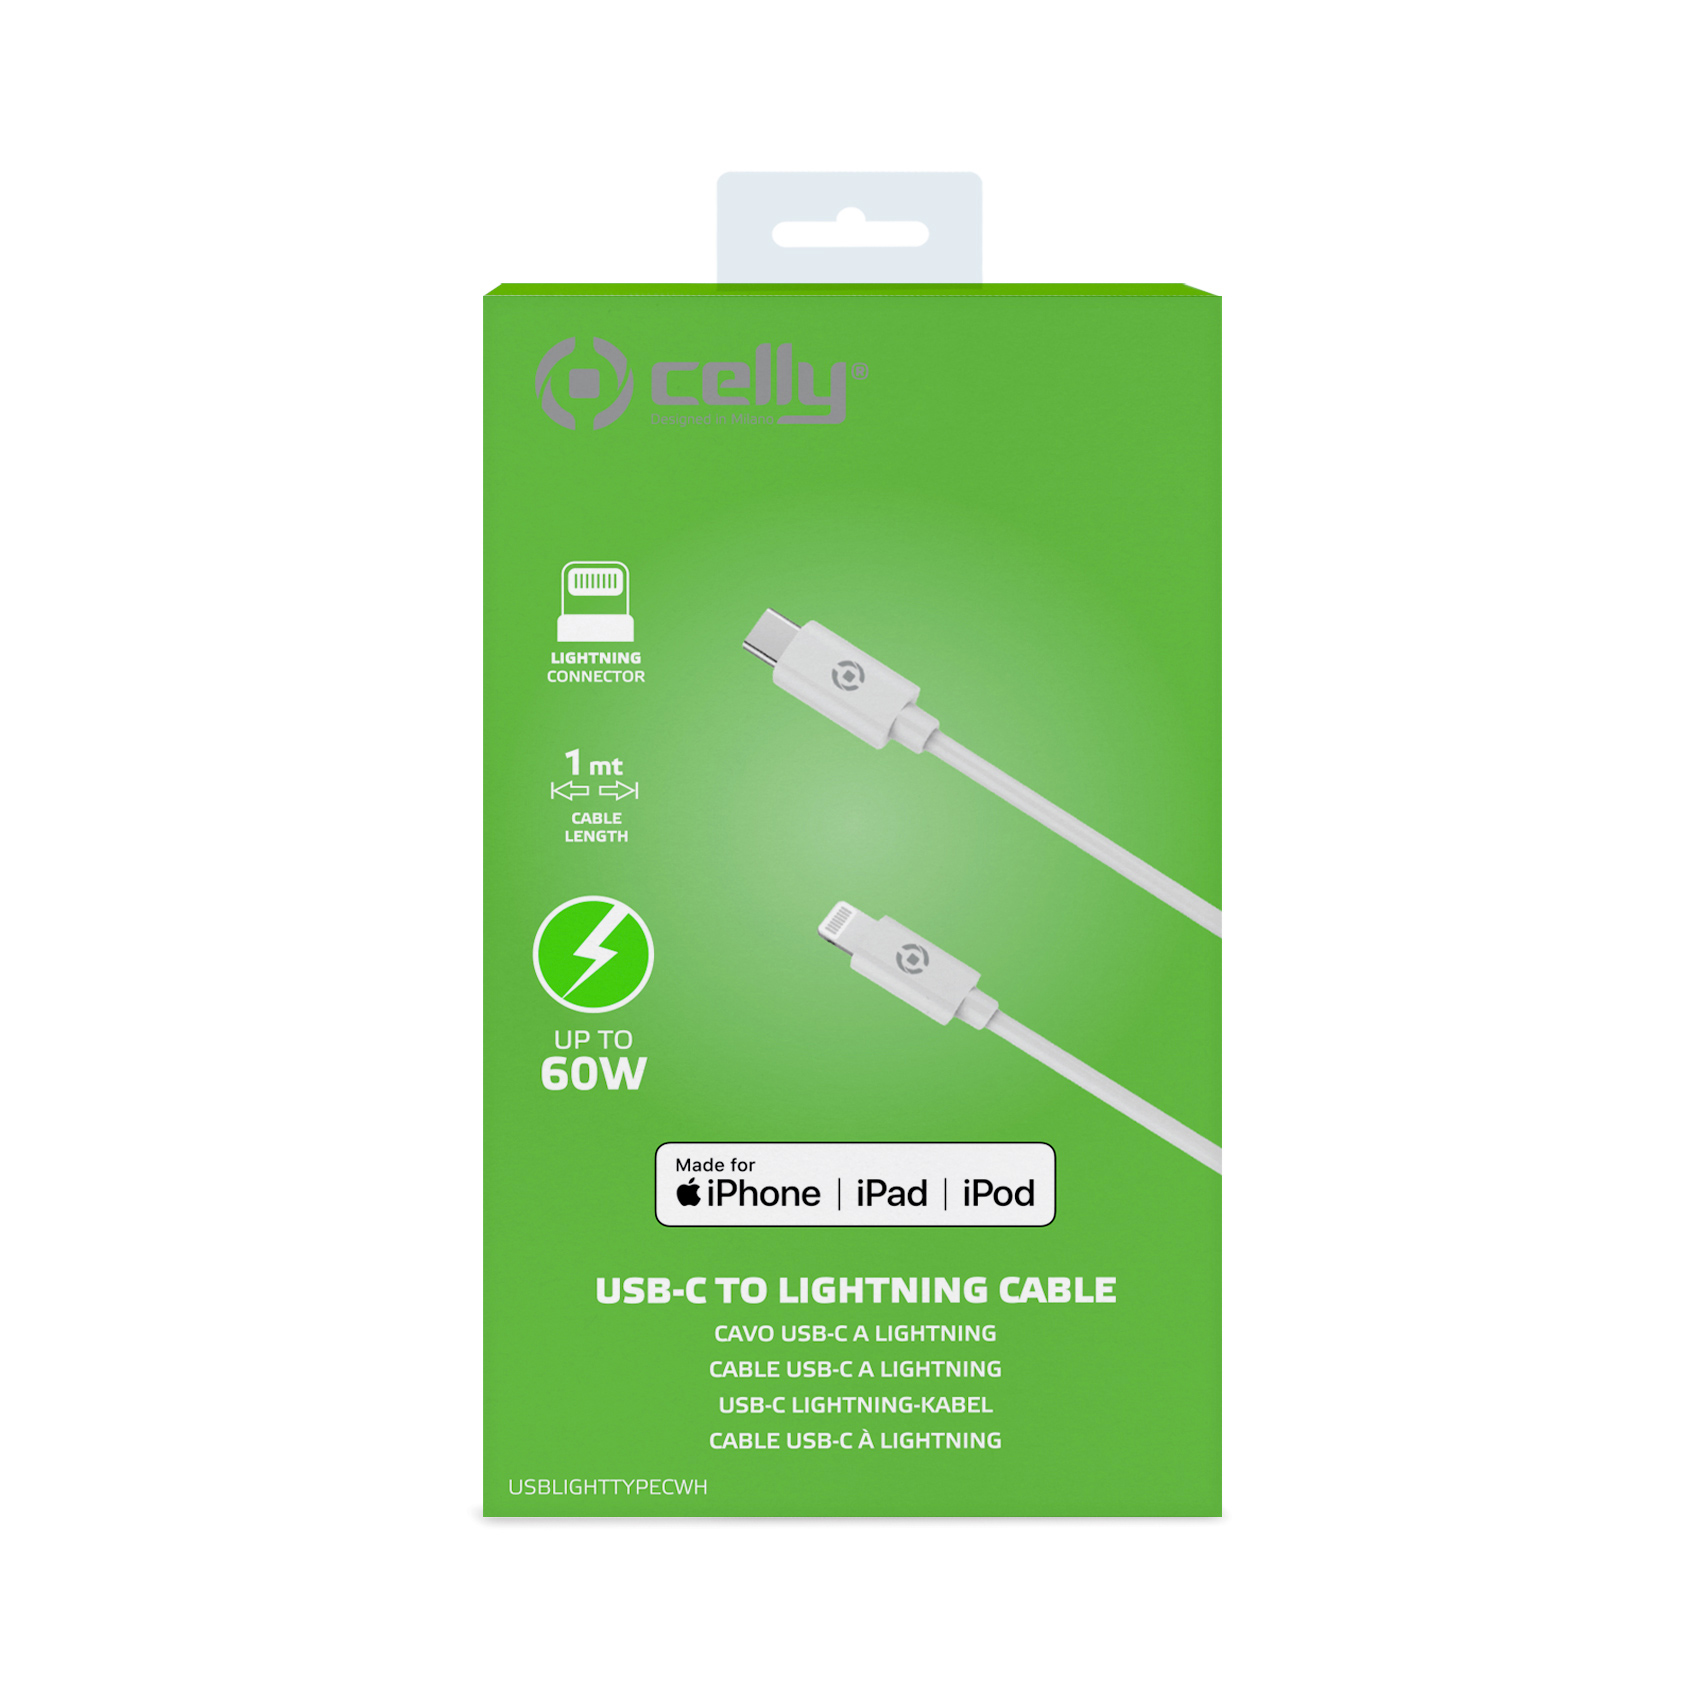 CELLY USB-C - LIGHTNING kabl za iPhone u BELOJ boji slika 3